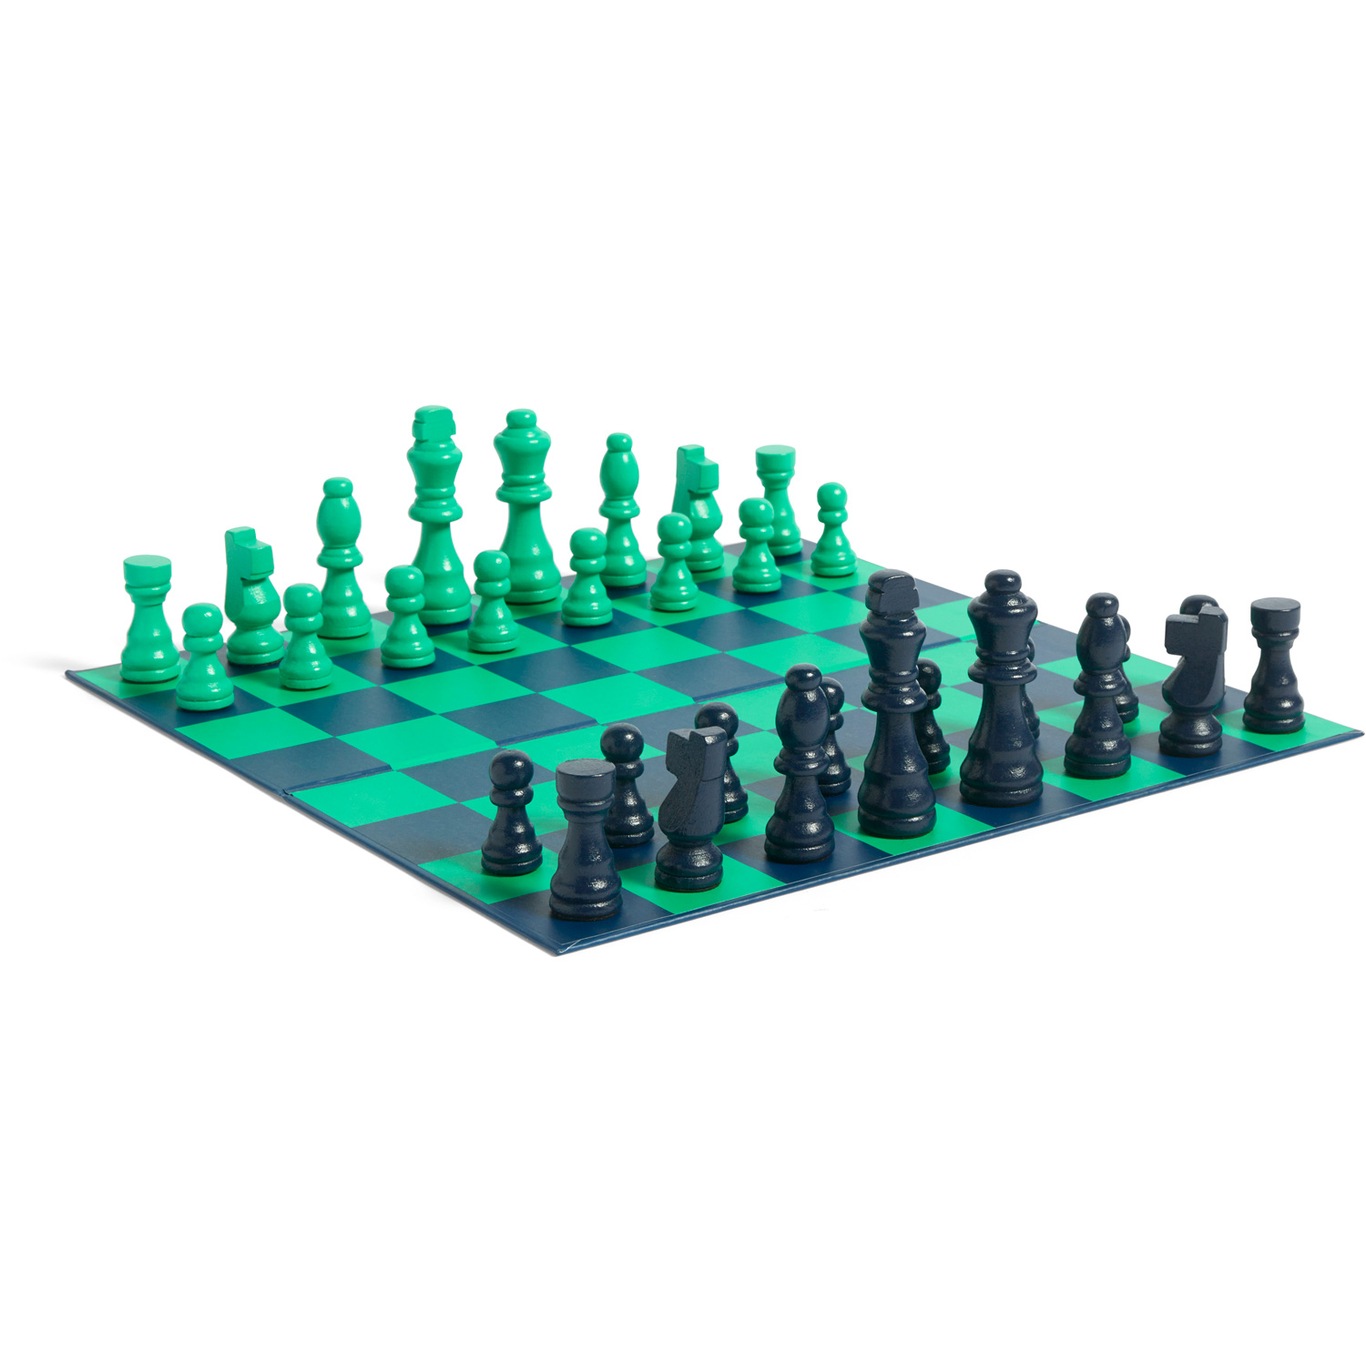 PLAY Chess Spil, Grønt